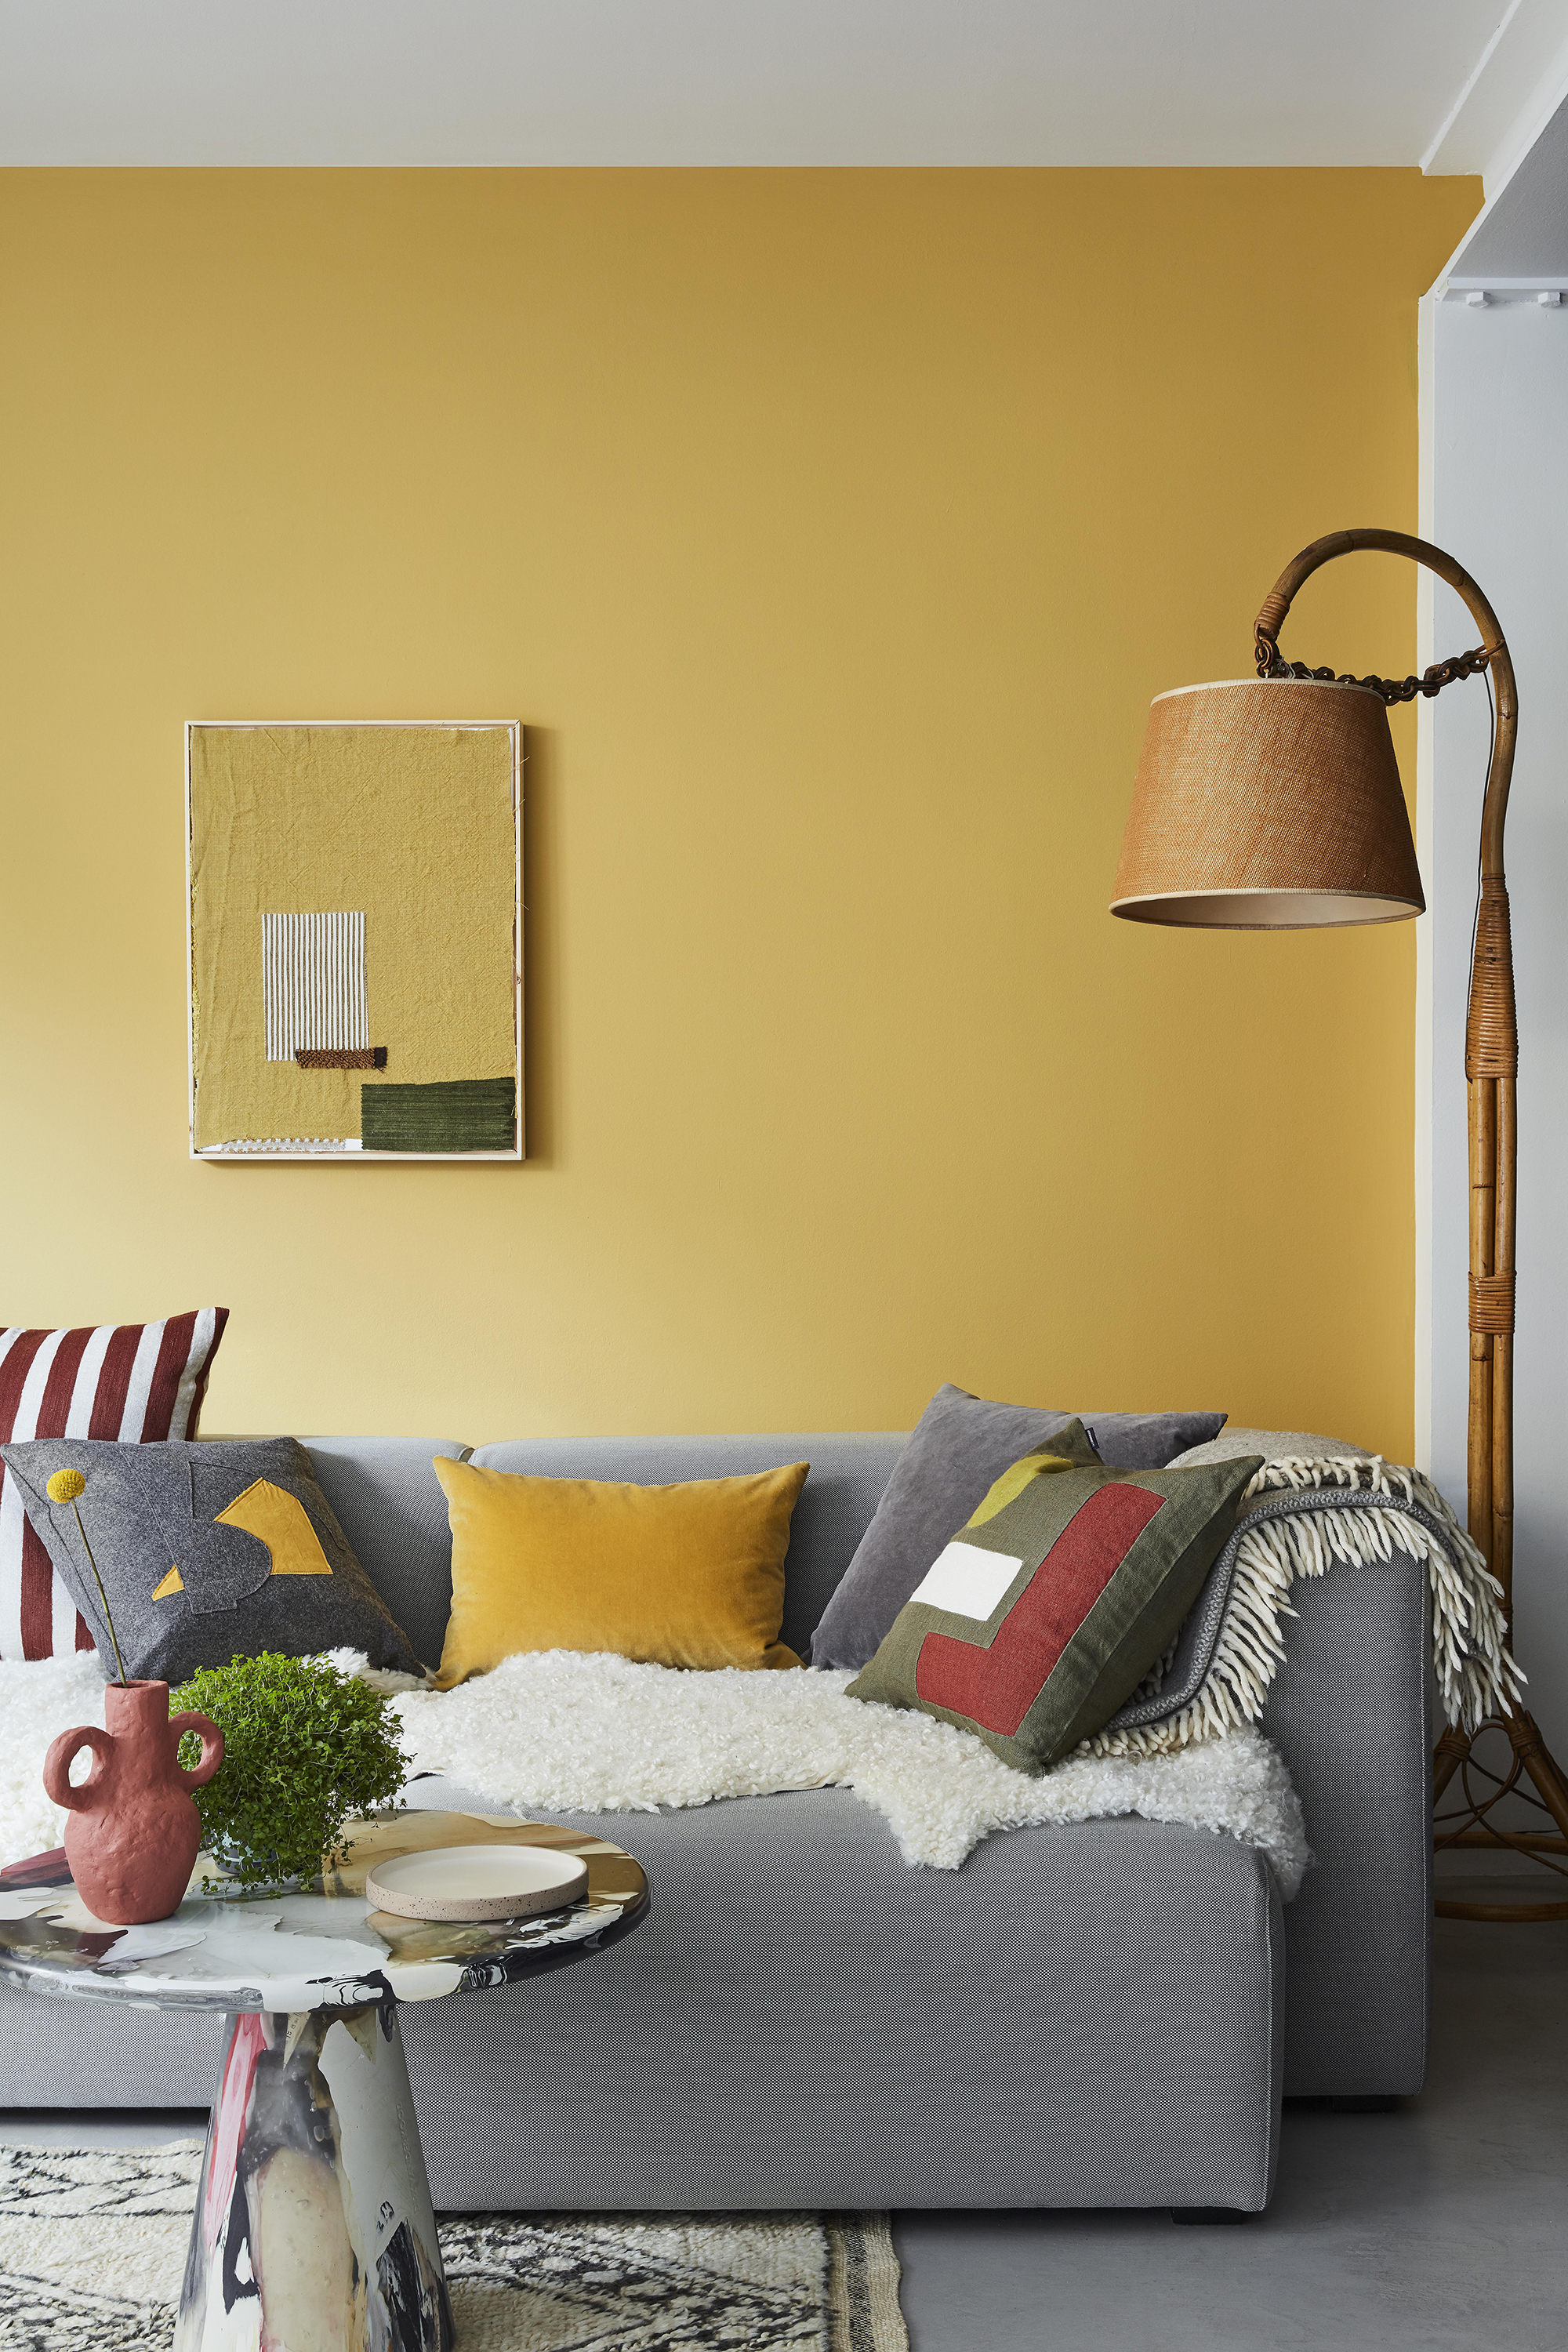 Yellow living room walls with grey sofa